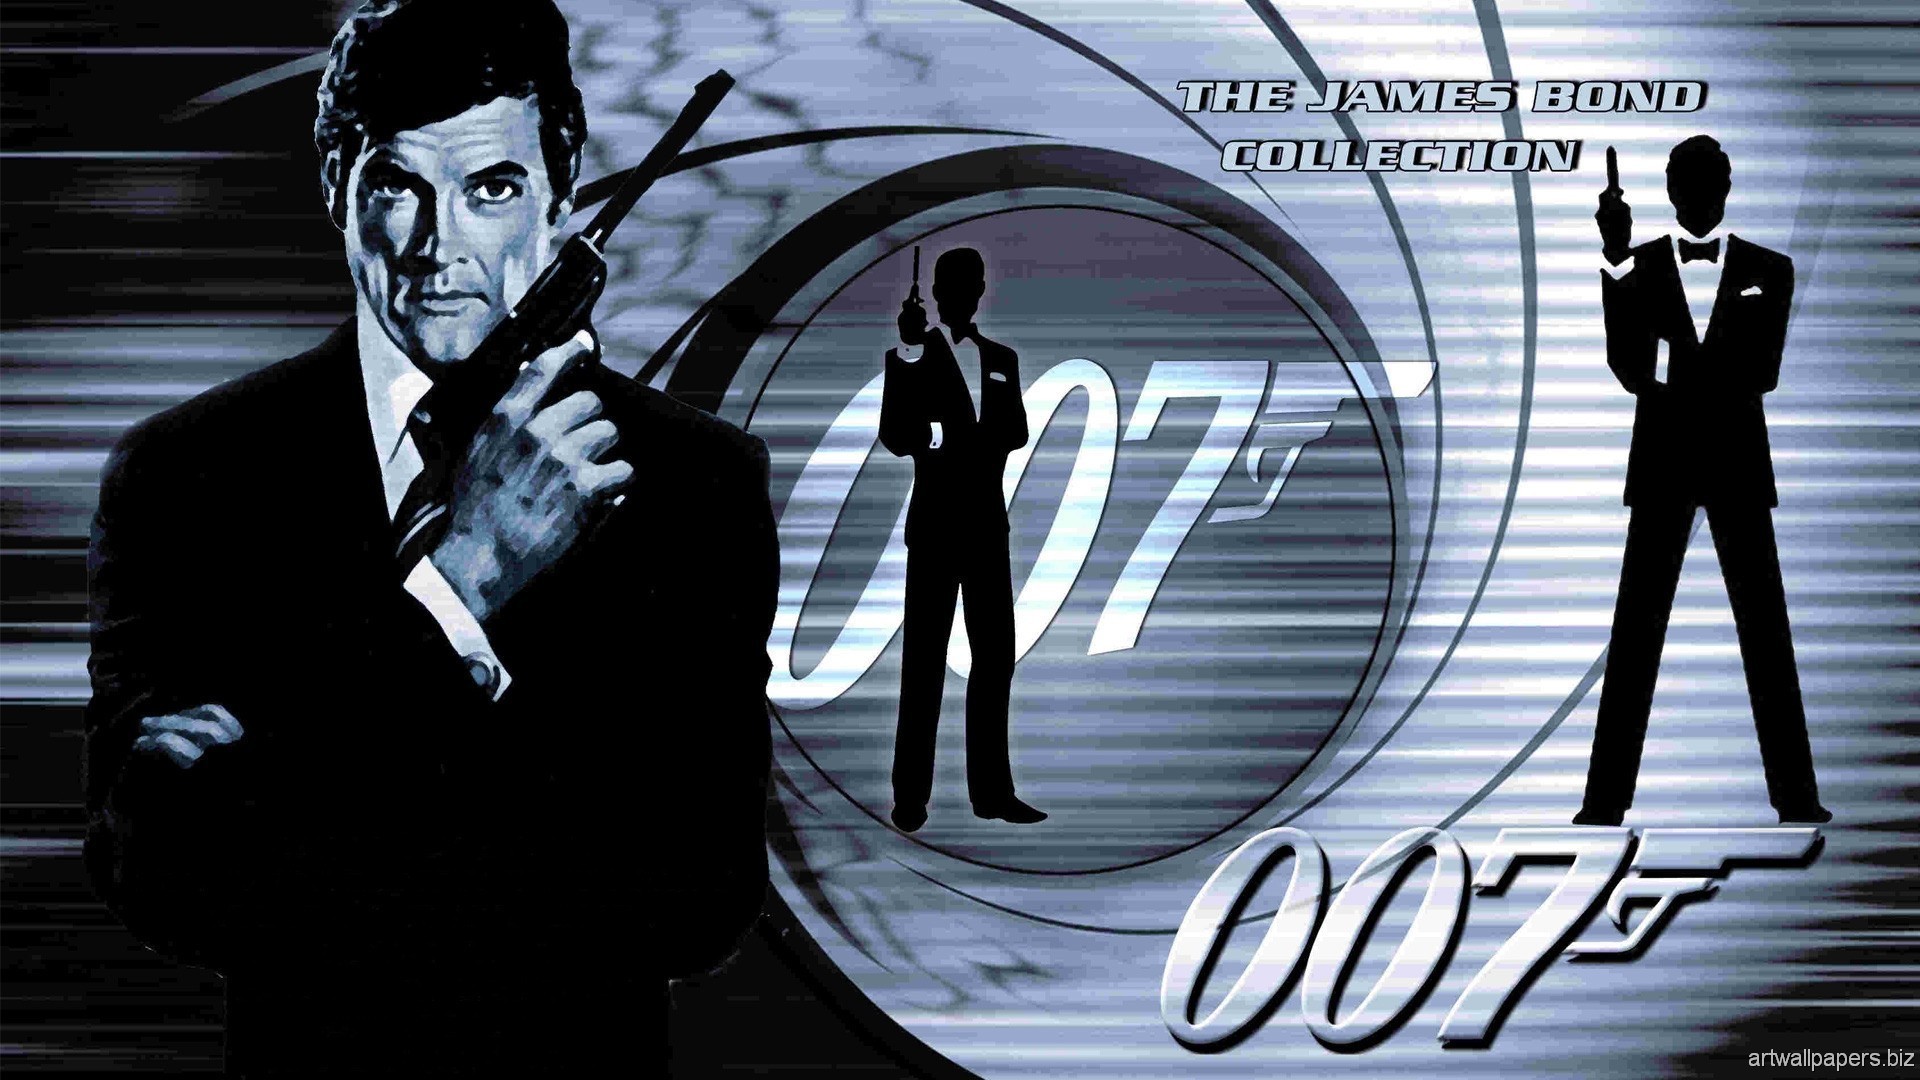 1920x1080 James Bond 007 Wallpaper from Casino Royale | CrackBerry.com ...